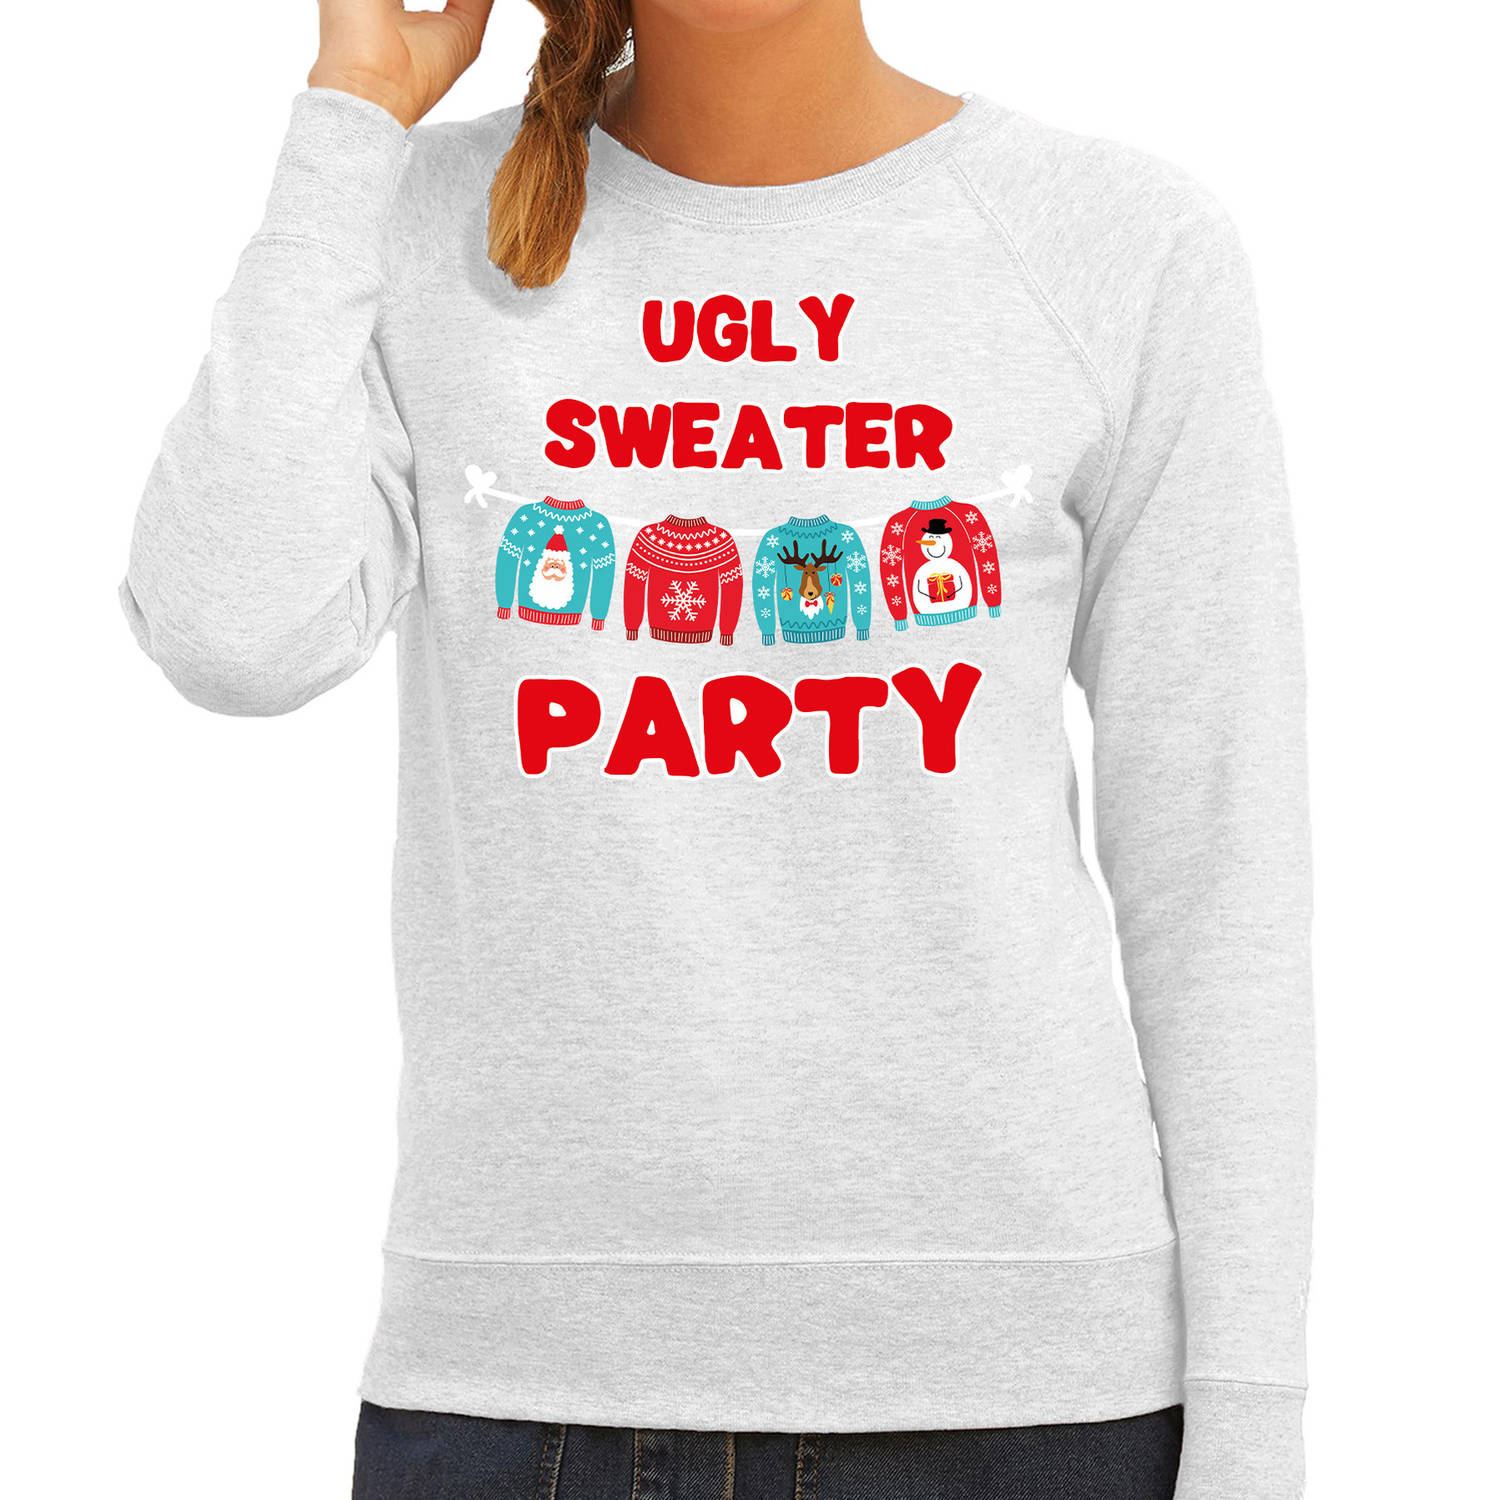 Grijze Kersttrui / Kerstkleding Ugly sweater party voor dames M - kerst truien